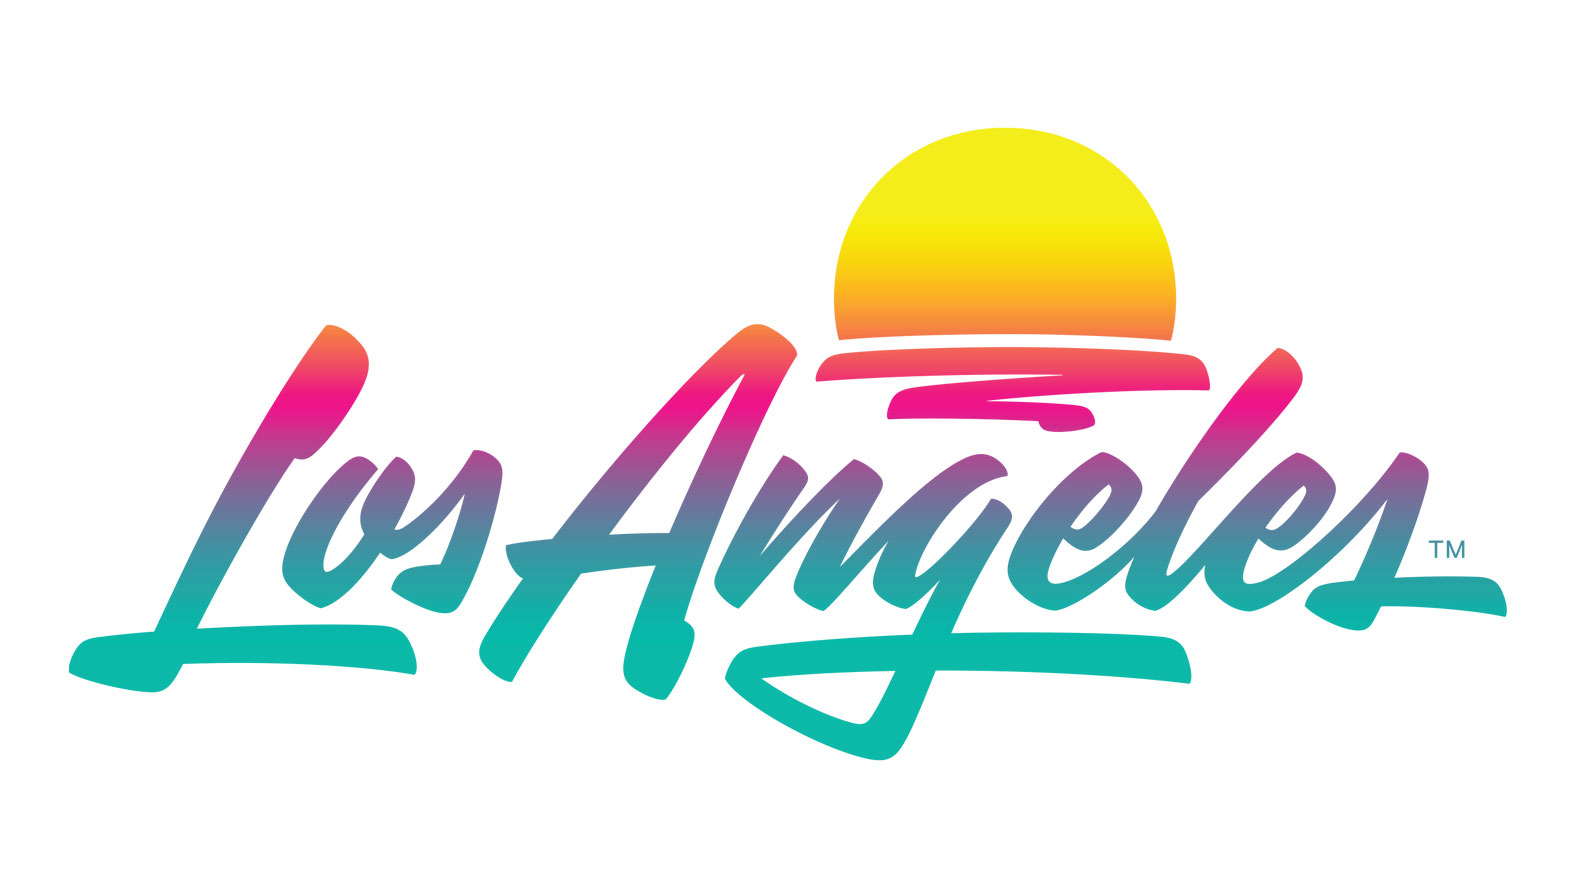 The new Los Angeles city logo is a retro delight Creative Bloq